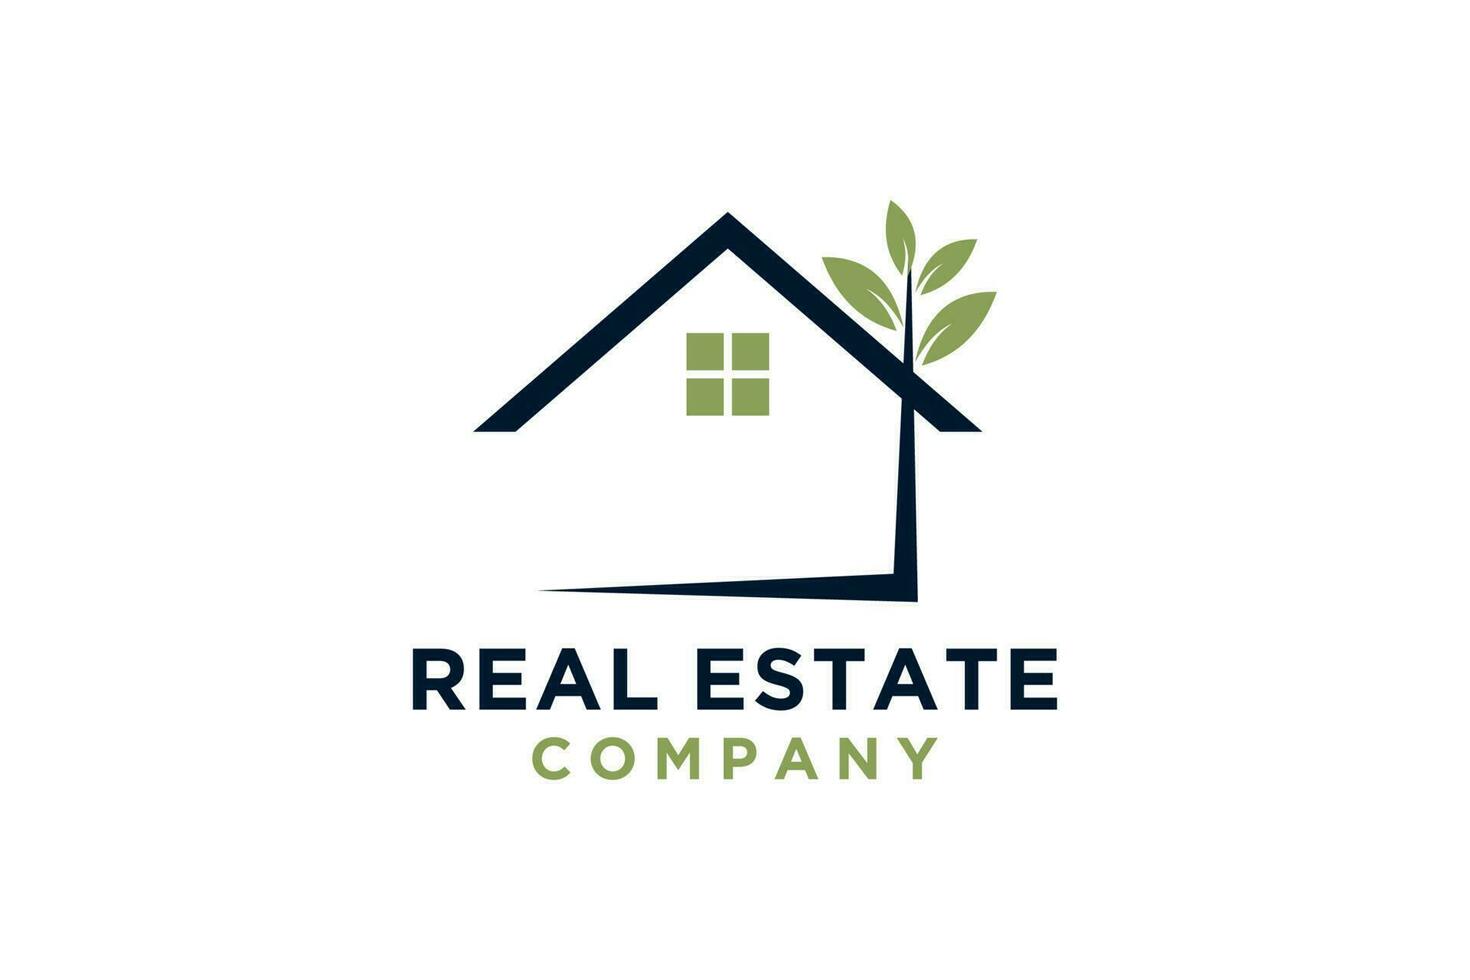 Real Estate, Building and Construction Logo Vector Design.